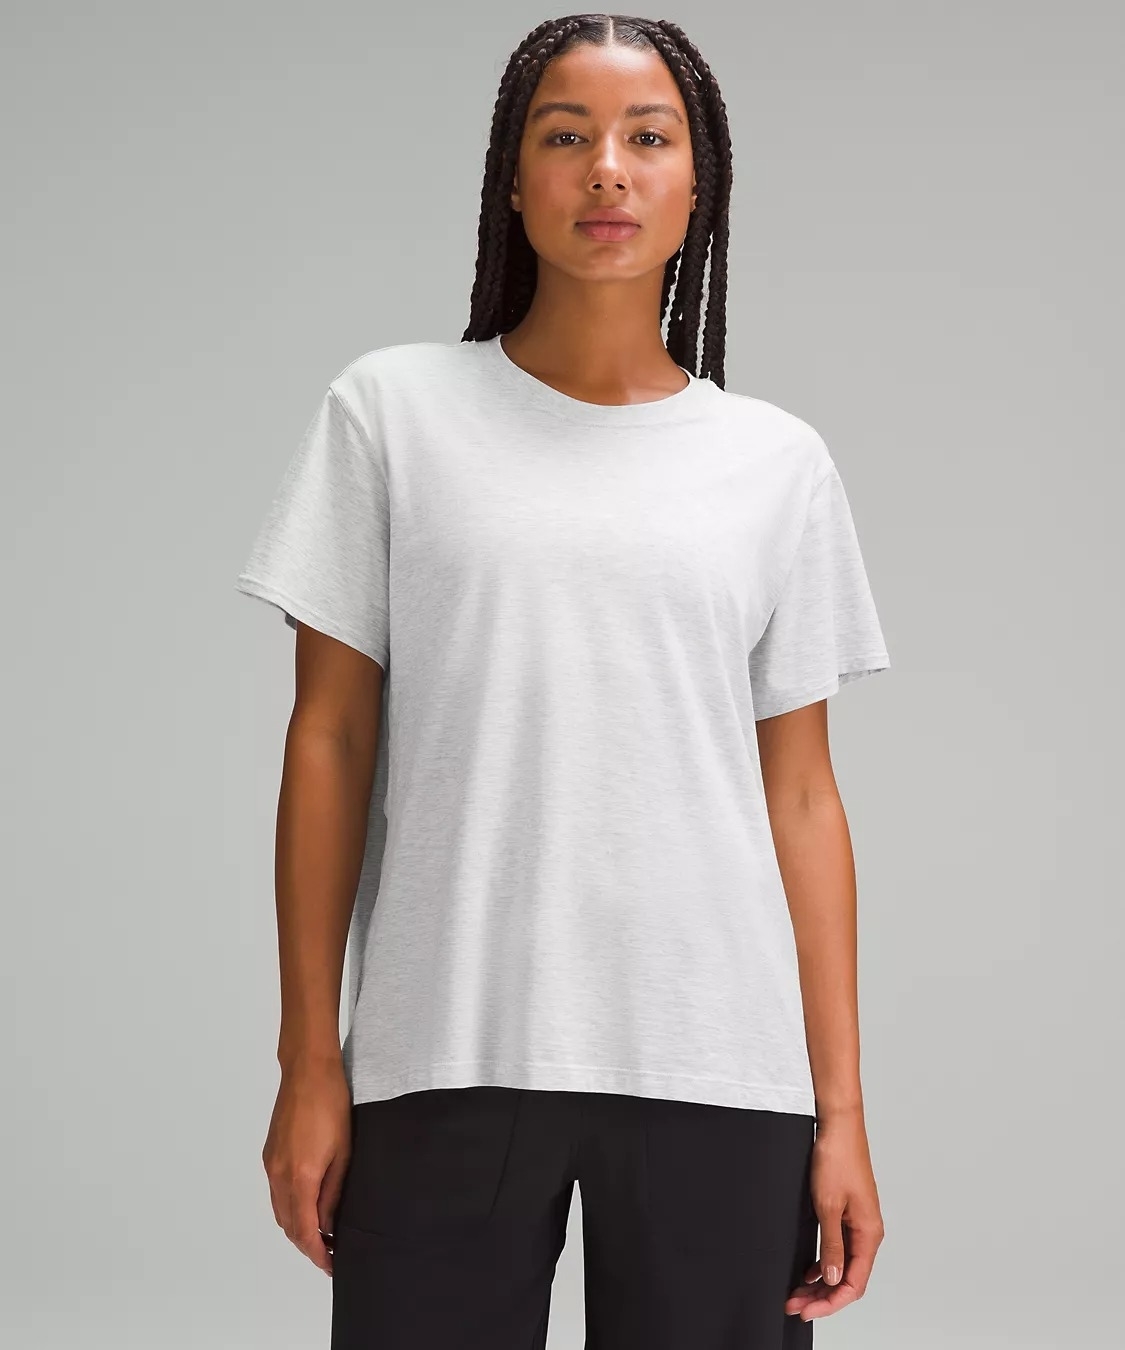 Model wearing light gray cotton T-shirt